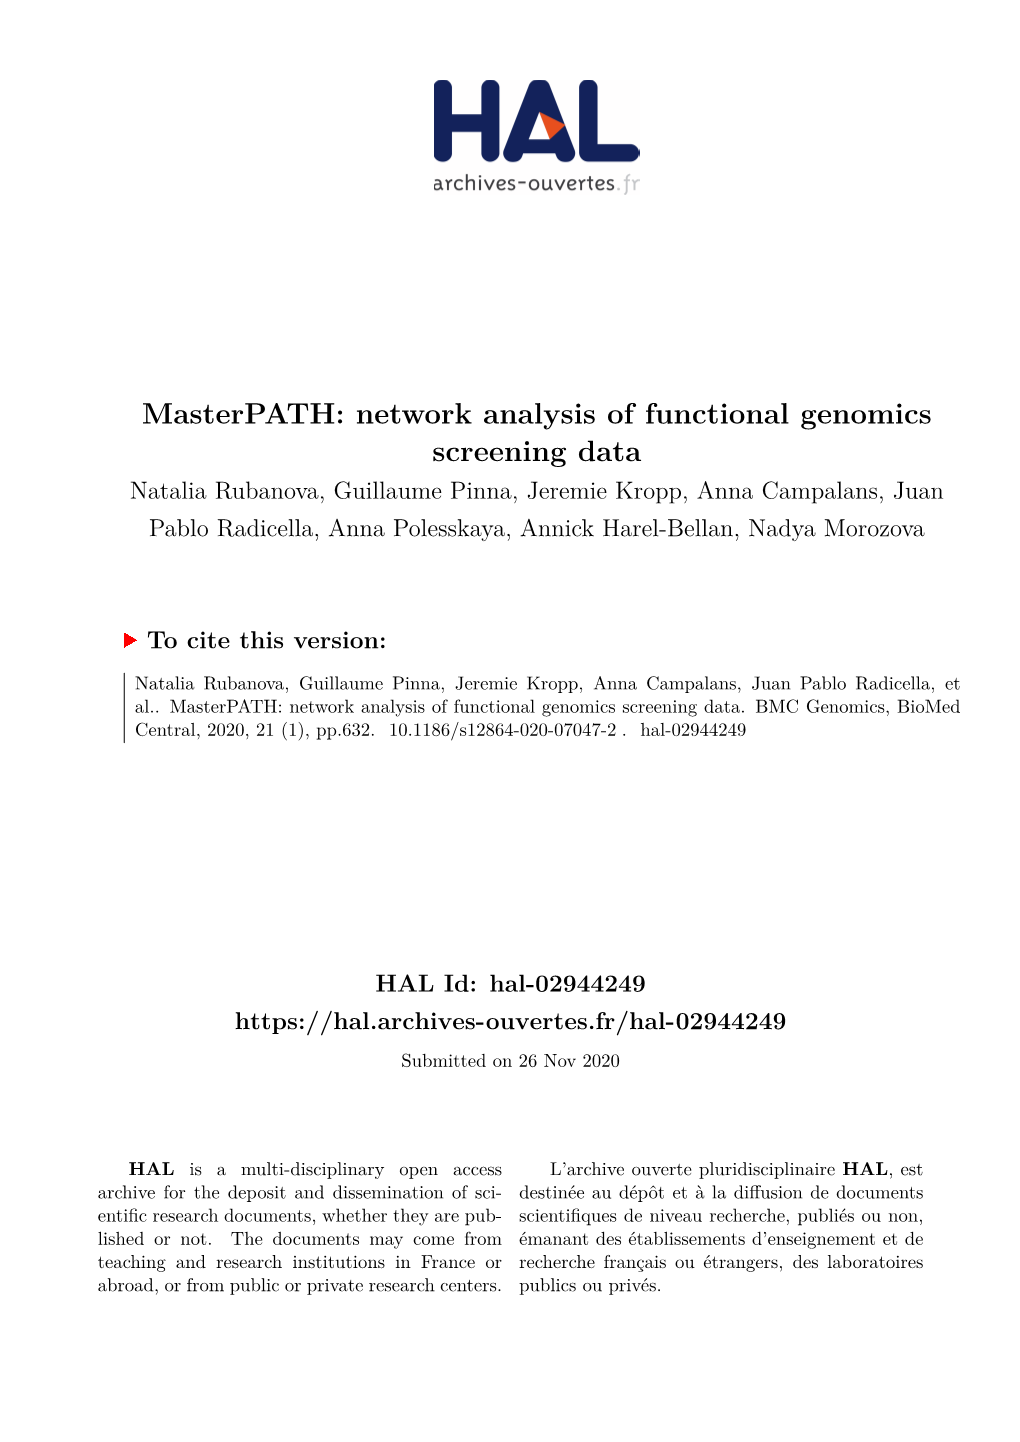 Masterpath: Network Analysis of Functional Genomics Screening Data